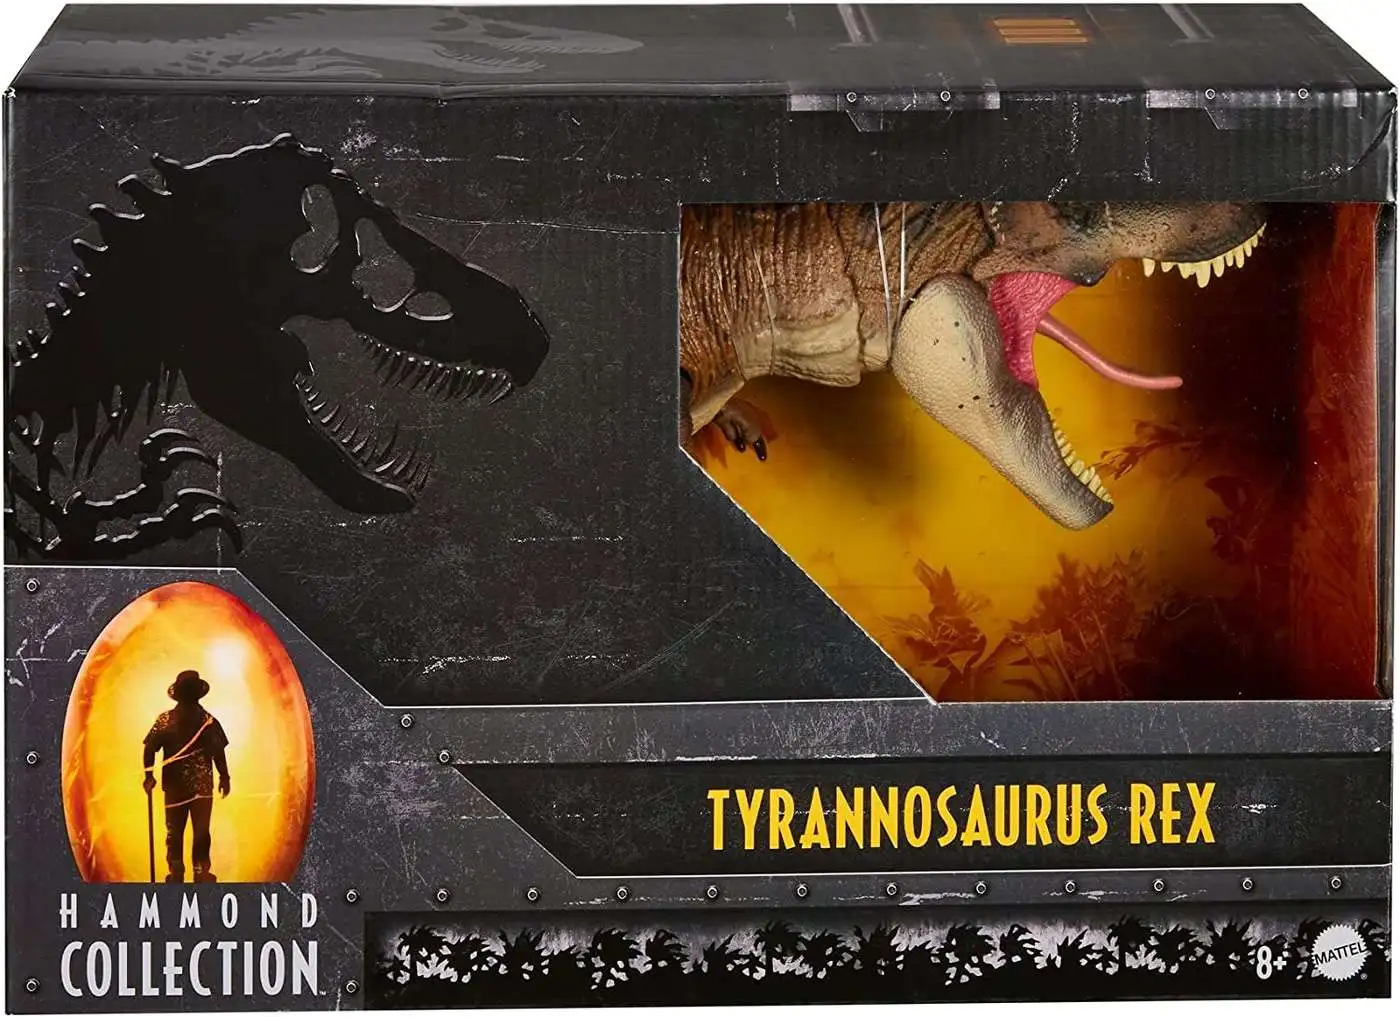 Mattel - Figurine d'action Mattel Dinosaurio T-Rex Jurassic World